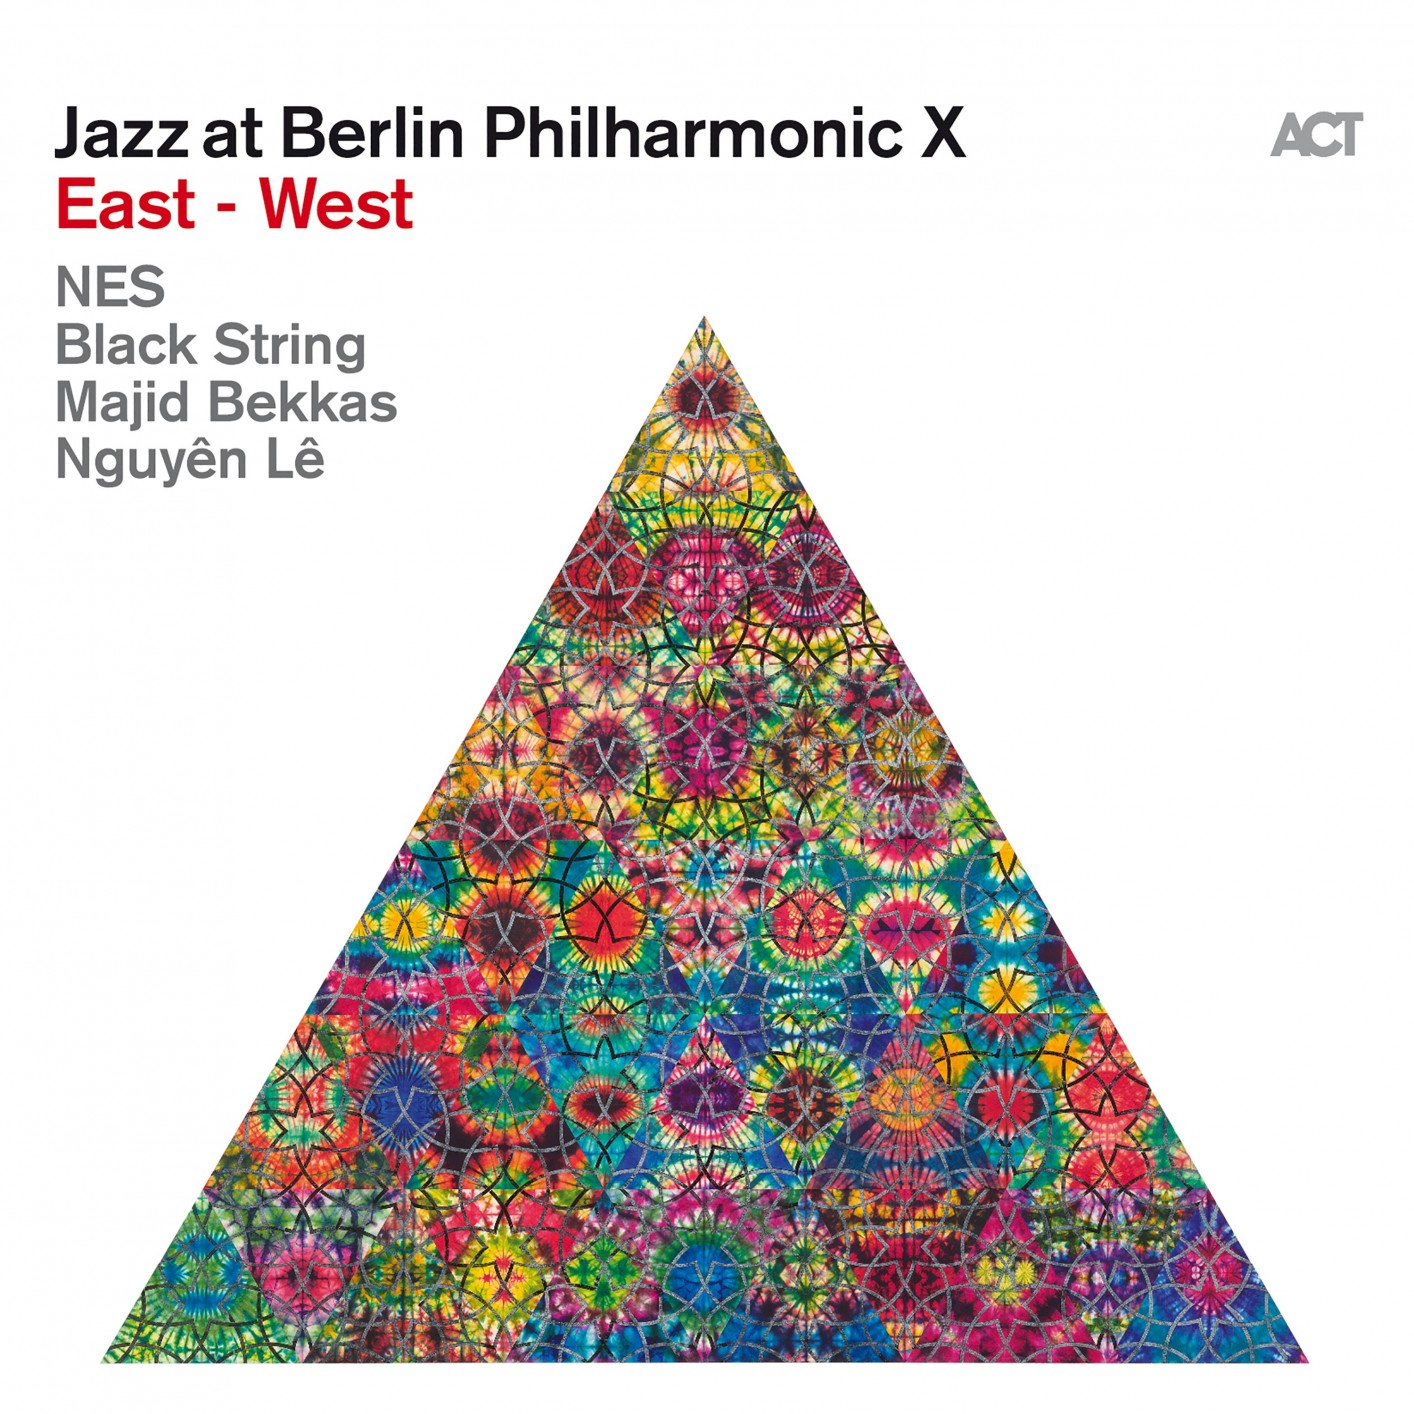 NES, Black String, Majid Bekkas, Nguyen Le - Jazz at Berlin Philharmonic X - East - West (2020) [FLAC 24bit/48kHz]